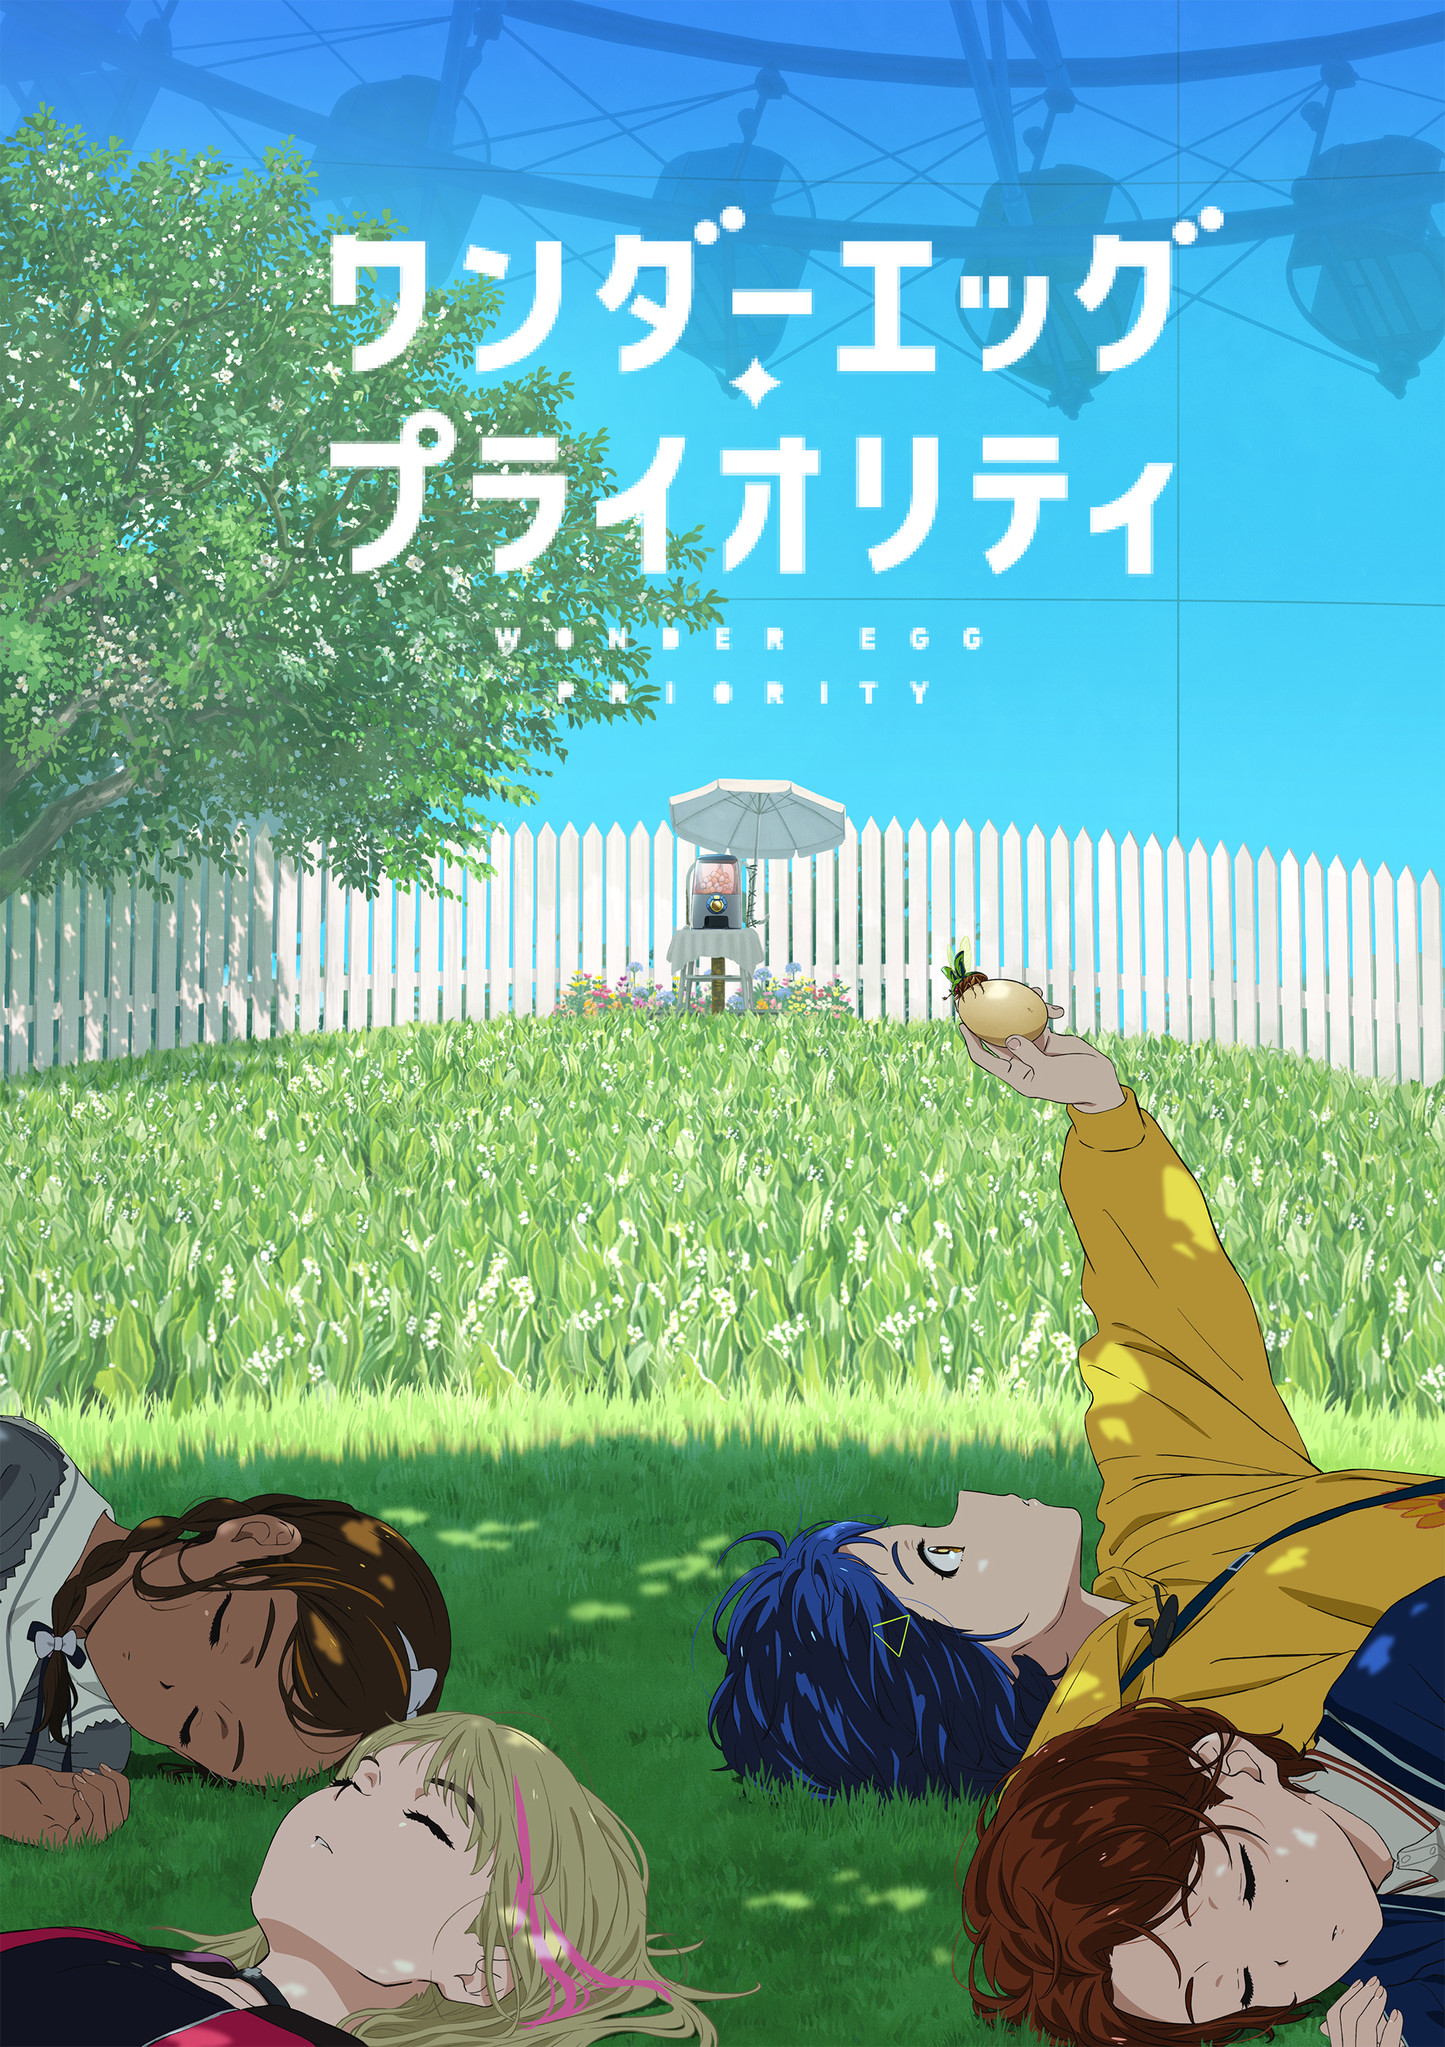 TVアニメ「ワンダーエッグ・プライオリティ」Blu-ray&DVD全3巻発売決定 ...